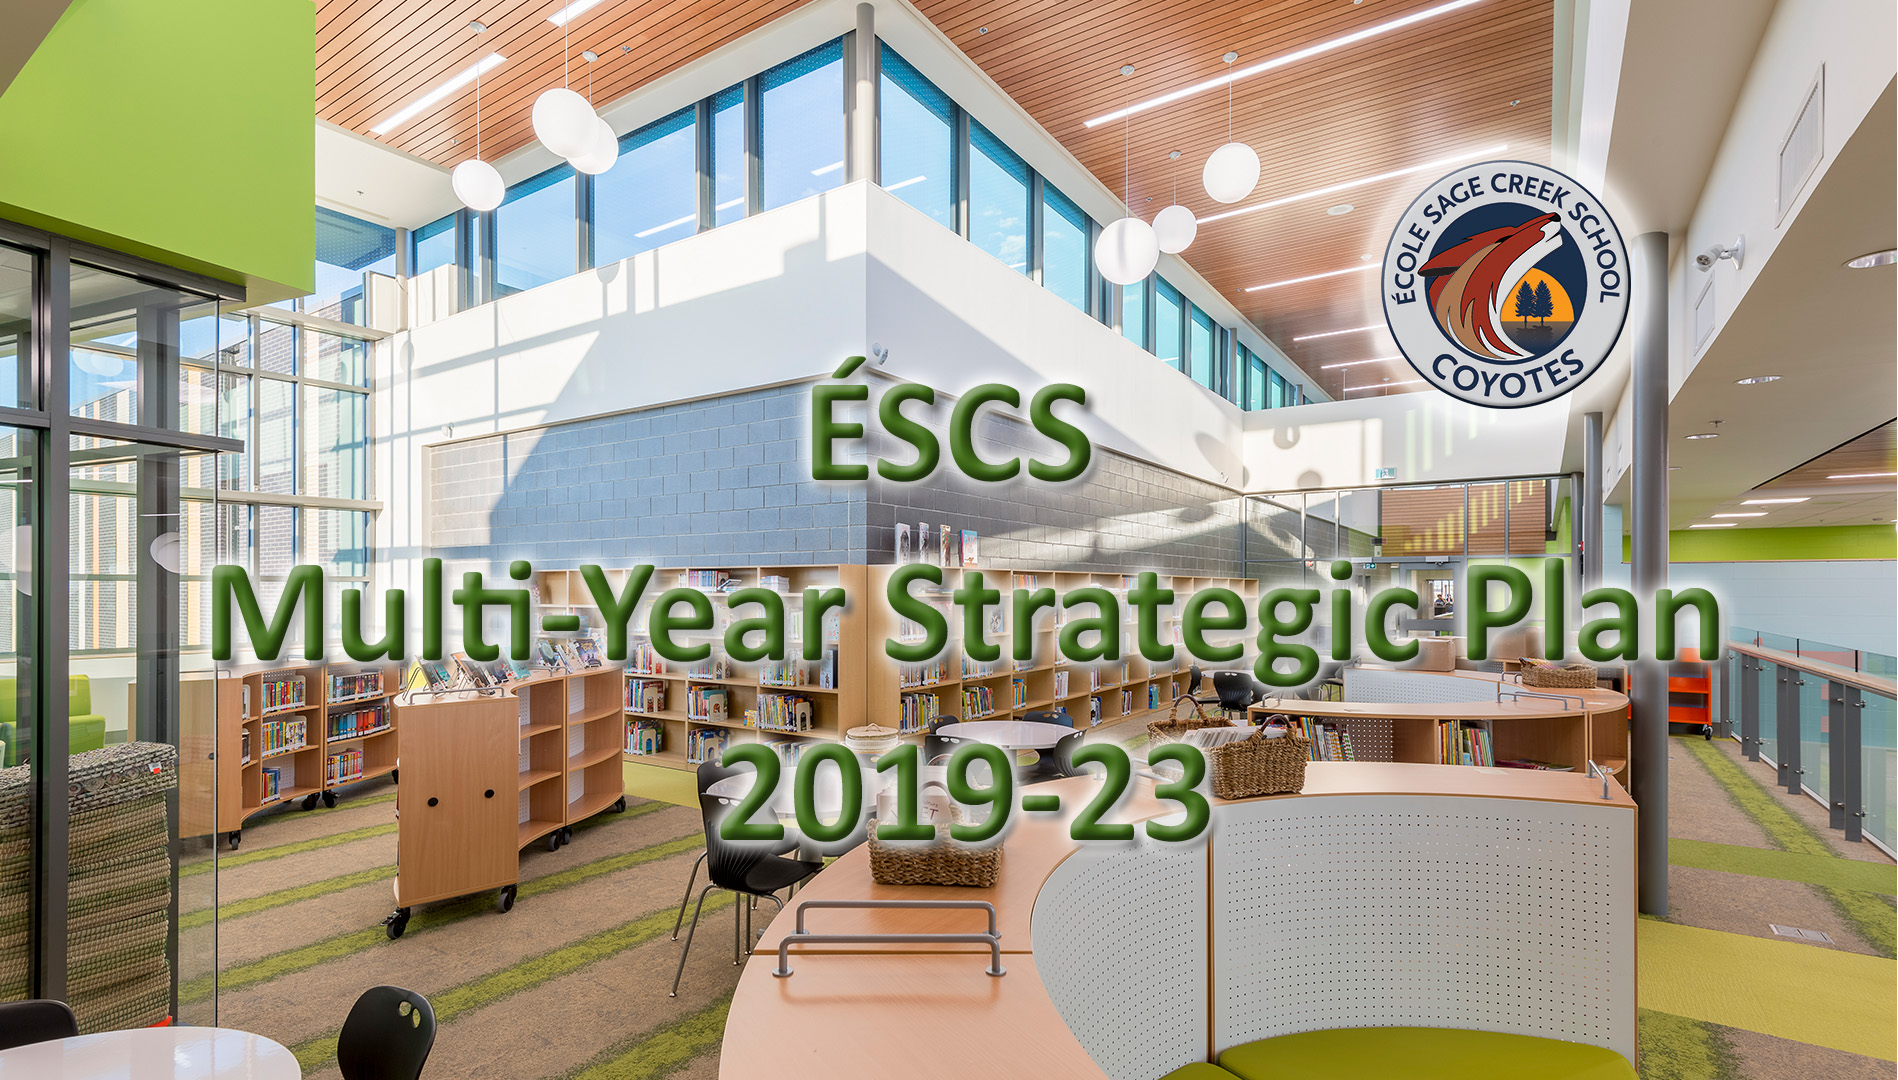 Multi Year Strategic Plan 2019-20.jpg